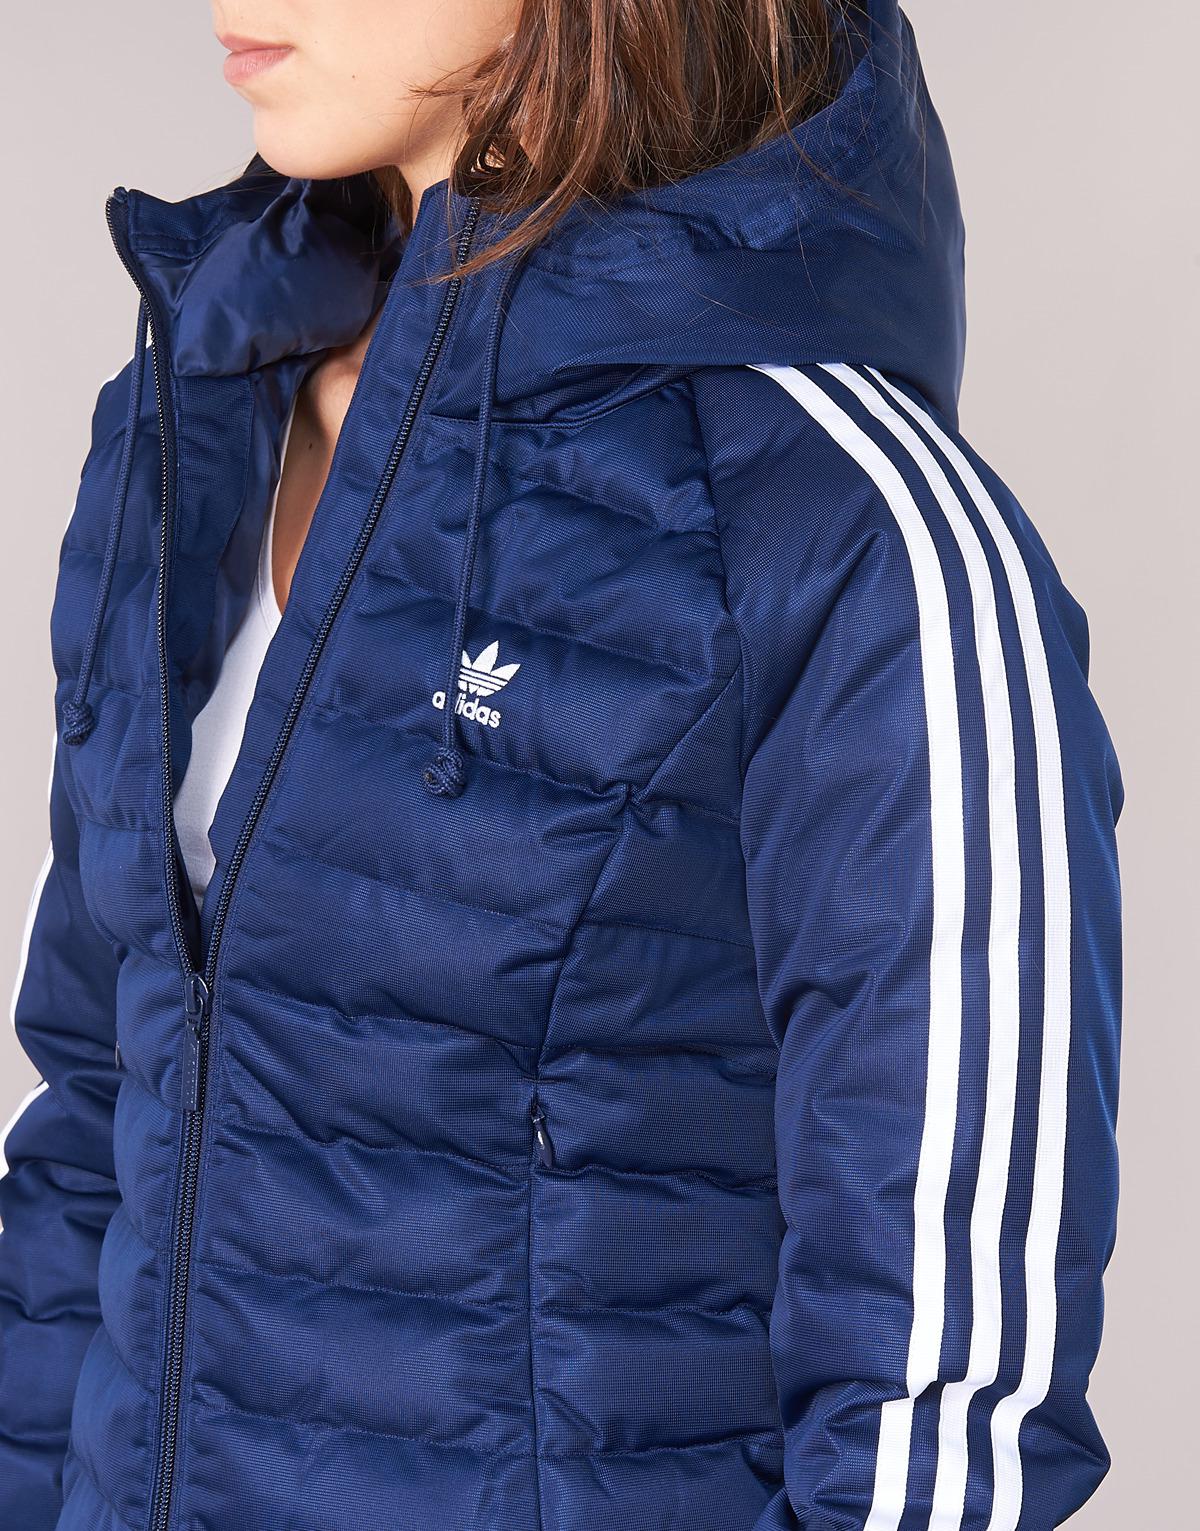 Doudoune Adidas Bleu Belgium, SAVE 40% - eagleflair.com